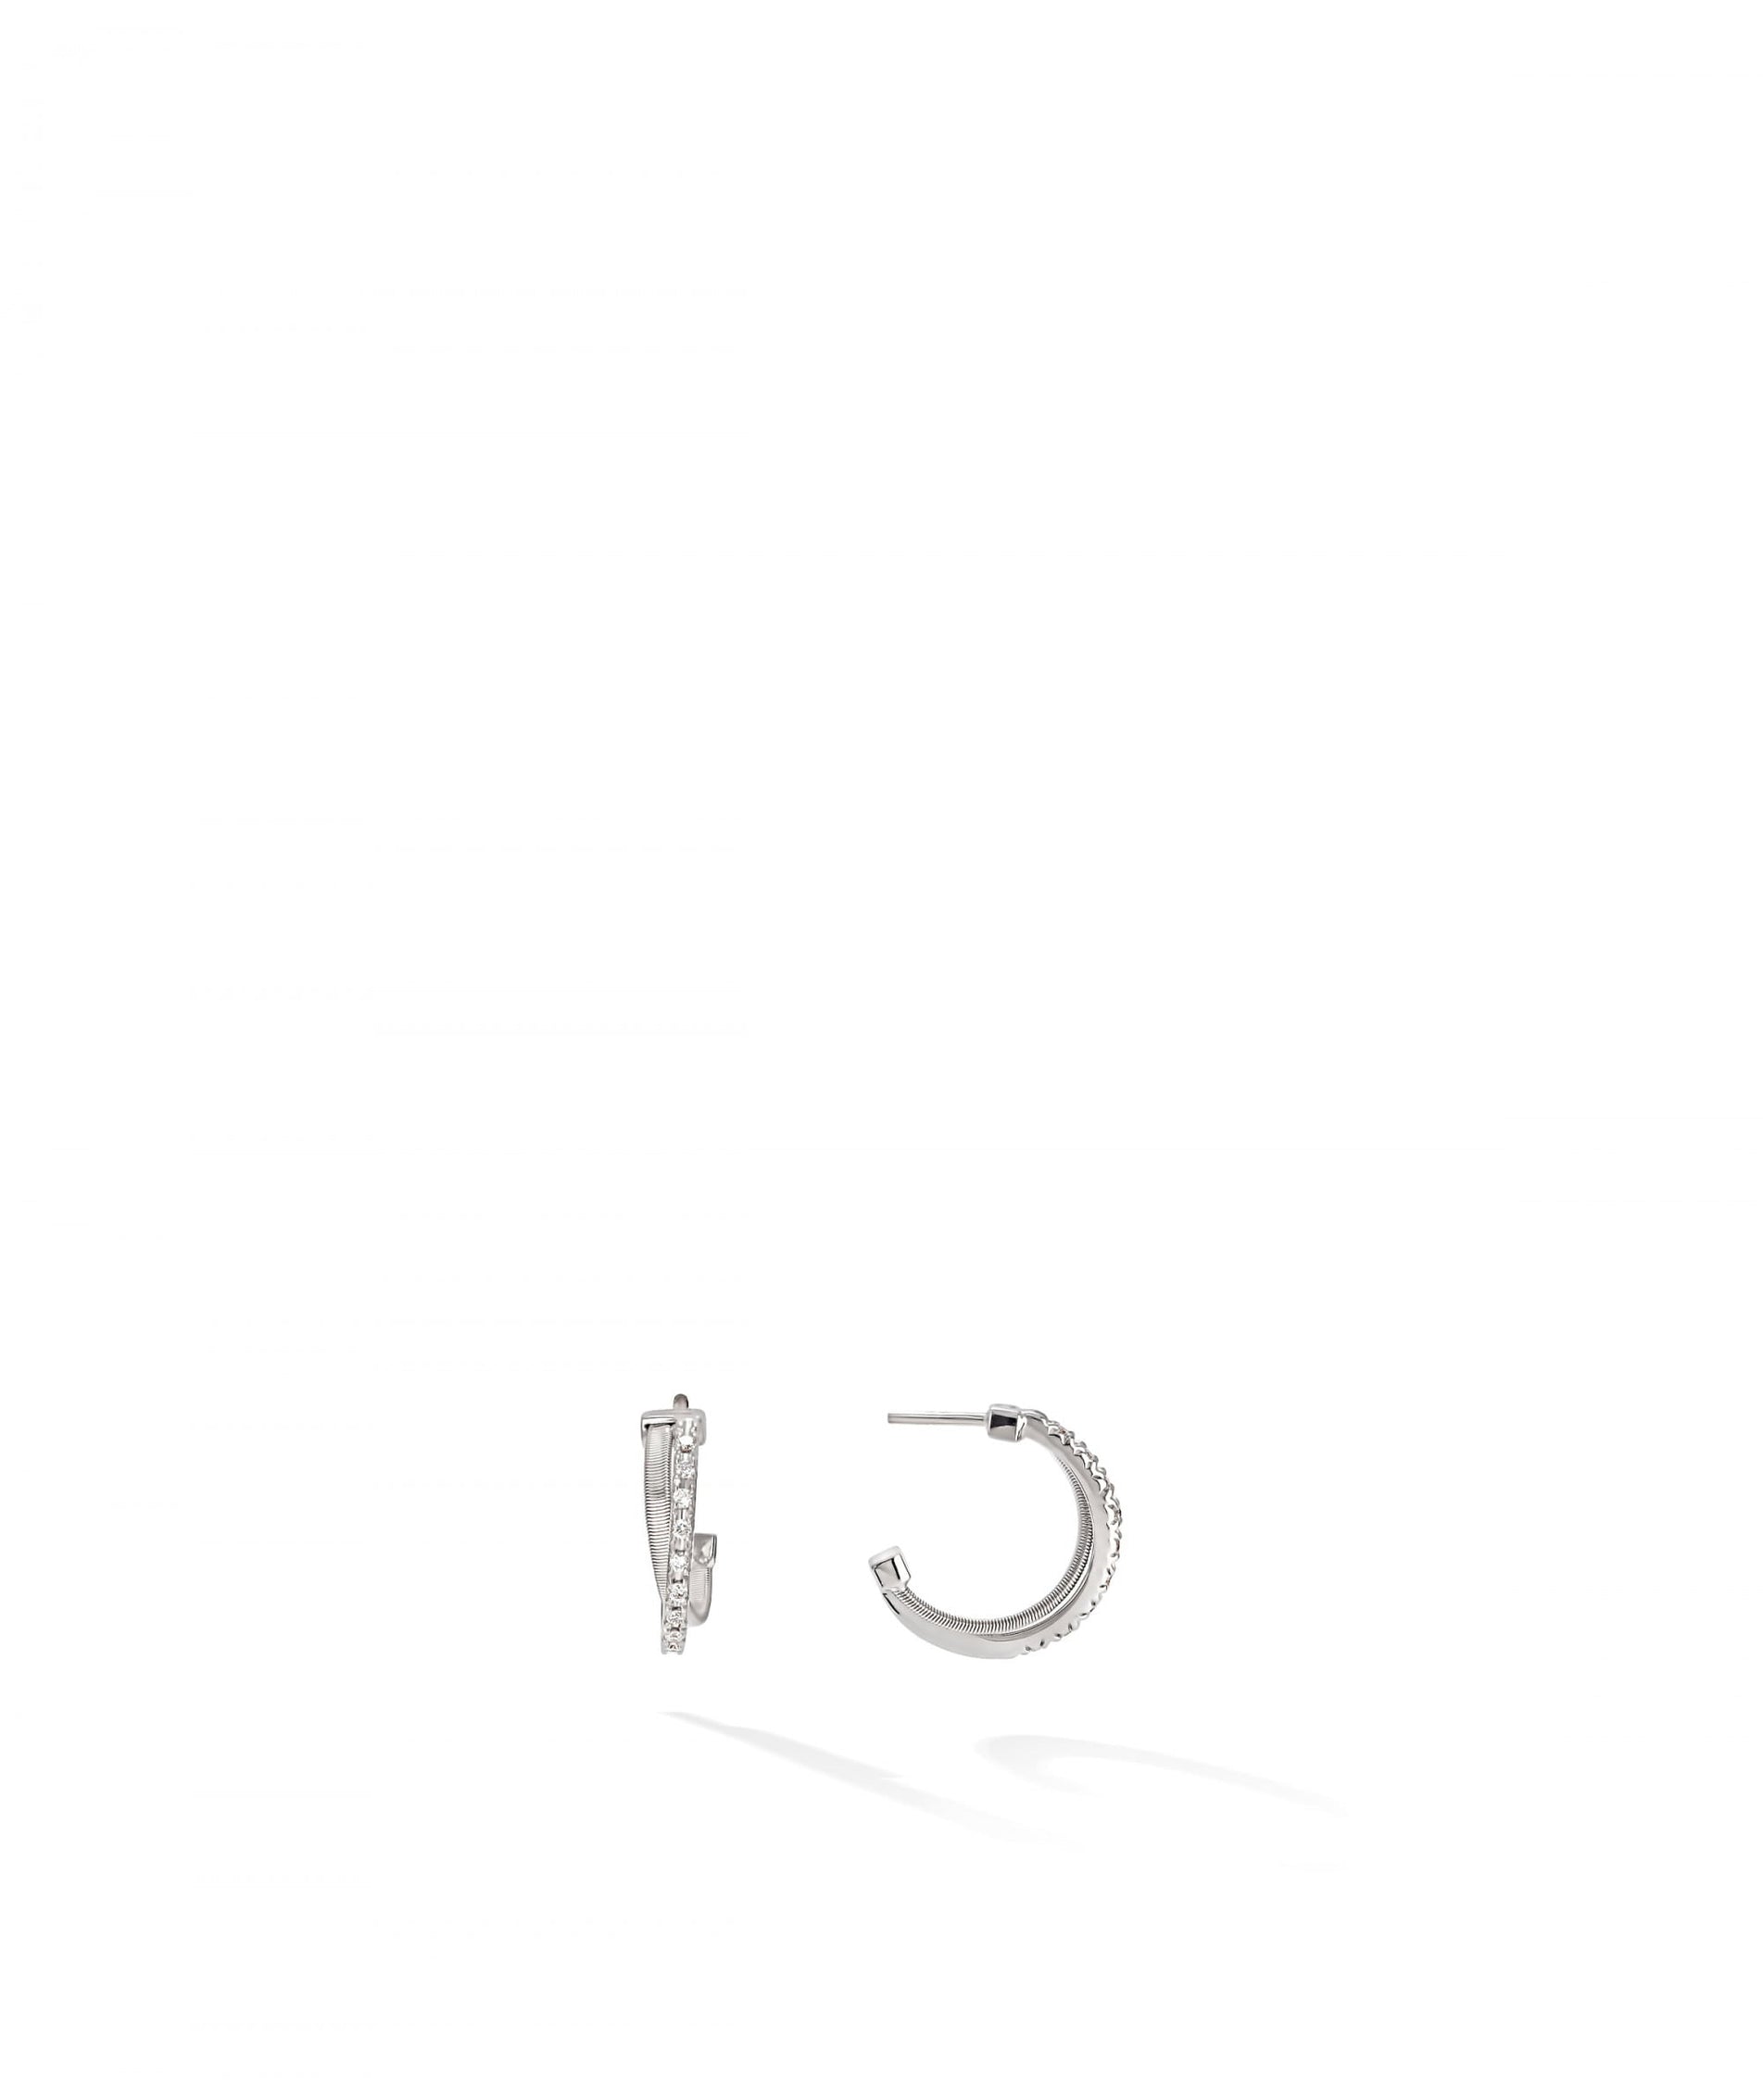 Goa Hoop Earrings in 18k White Gold with Diamonds - Orsini Jewellers NZ